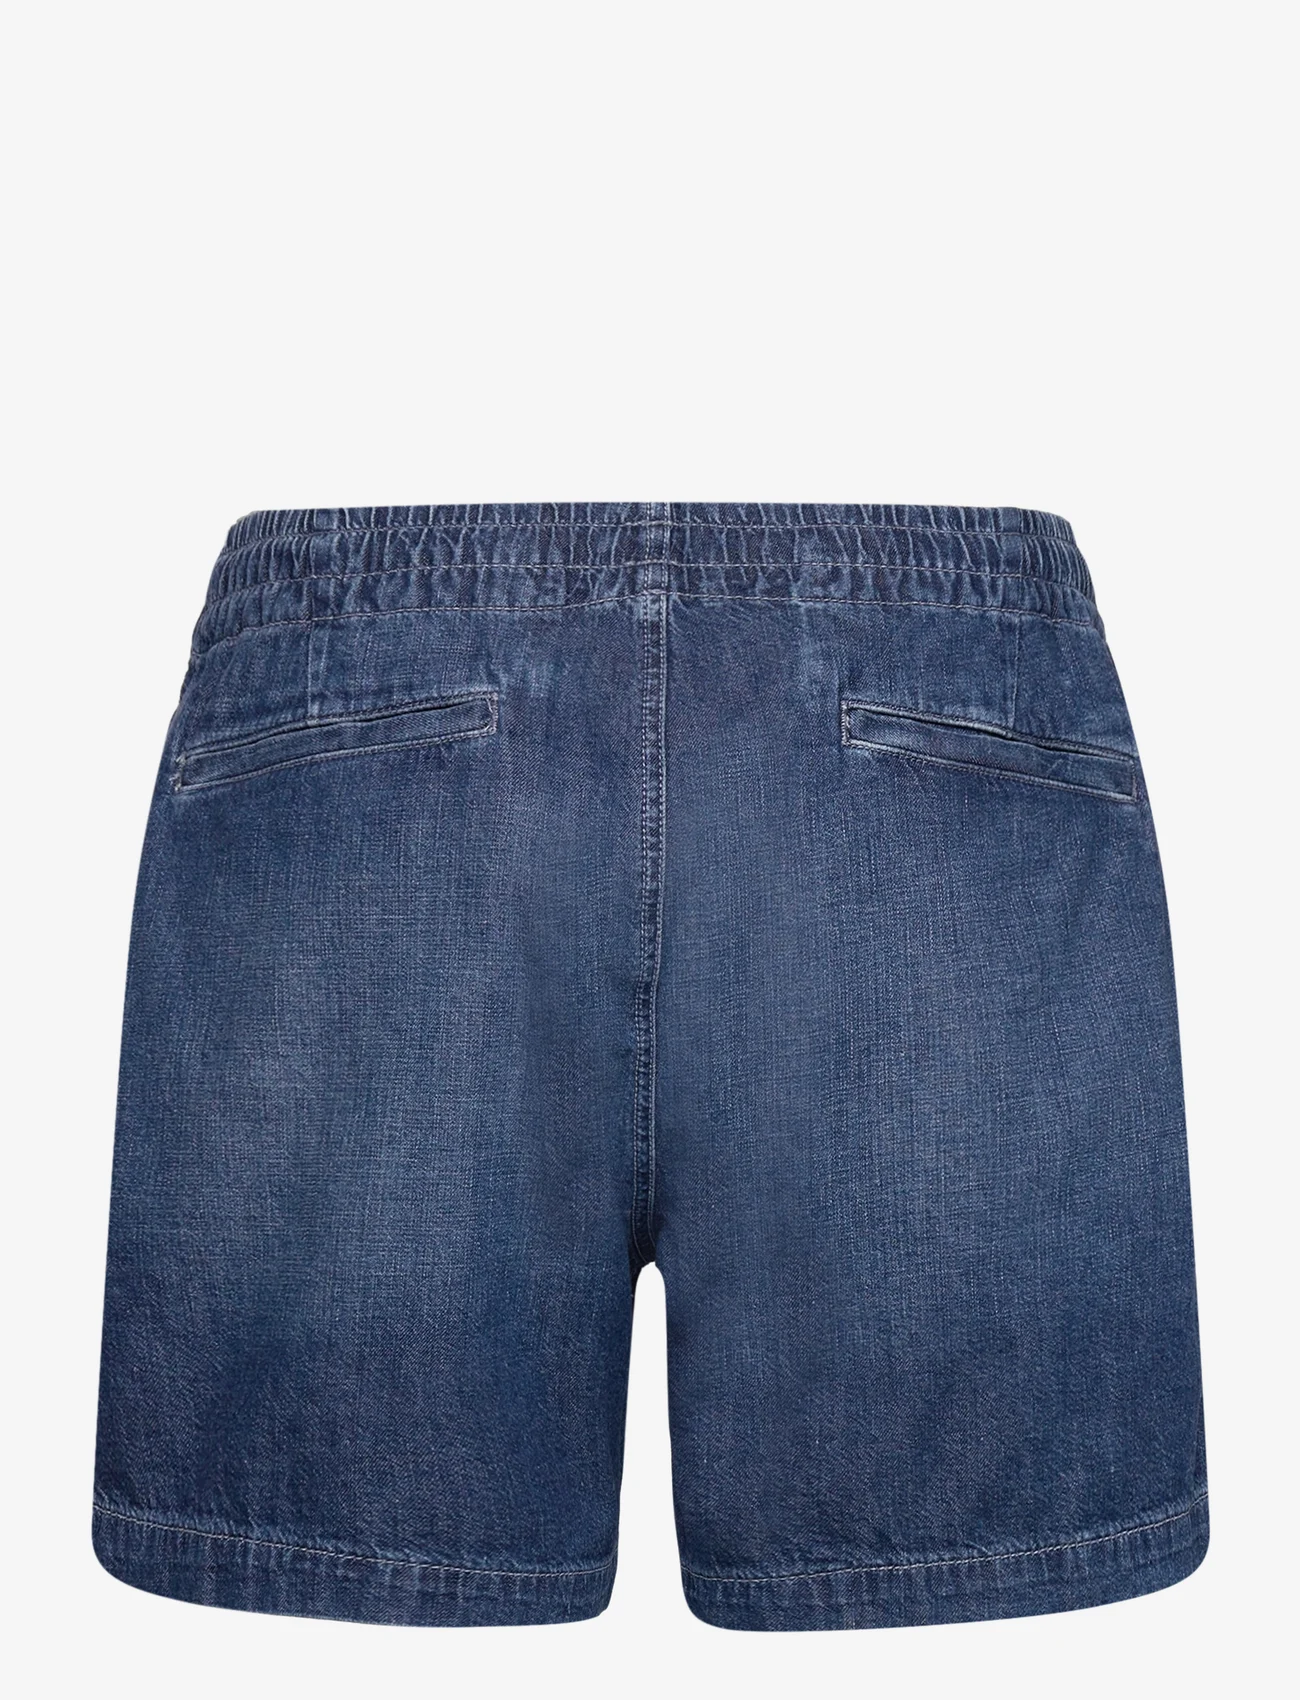 Polo Ralph Lauren - 6.5-Inch Polo Prepster Denim Short - jeansowe szorty - blane - 1